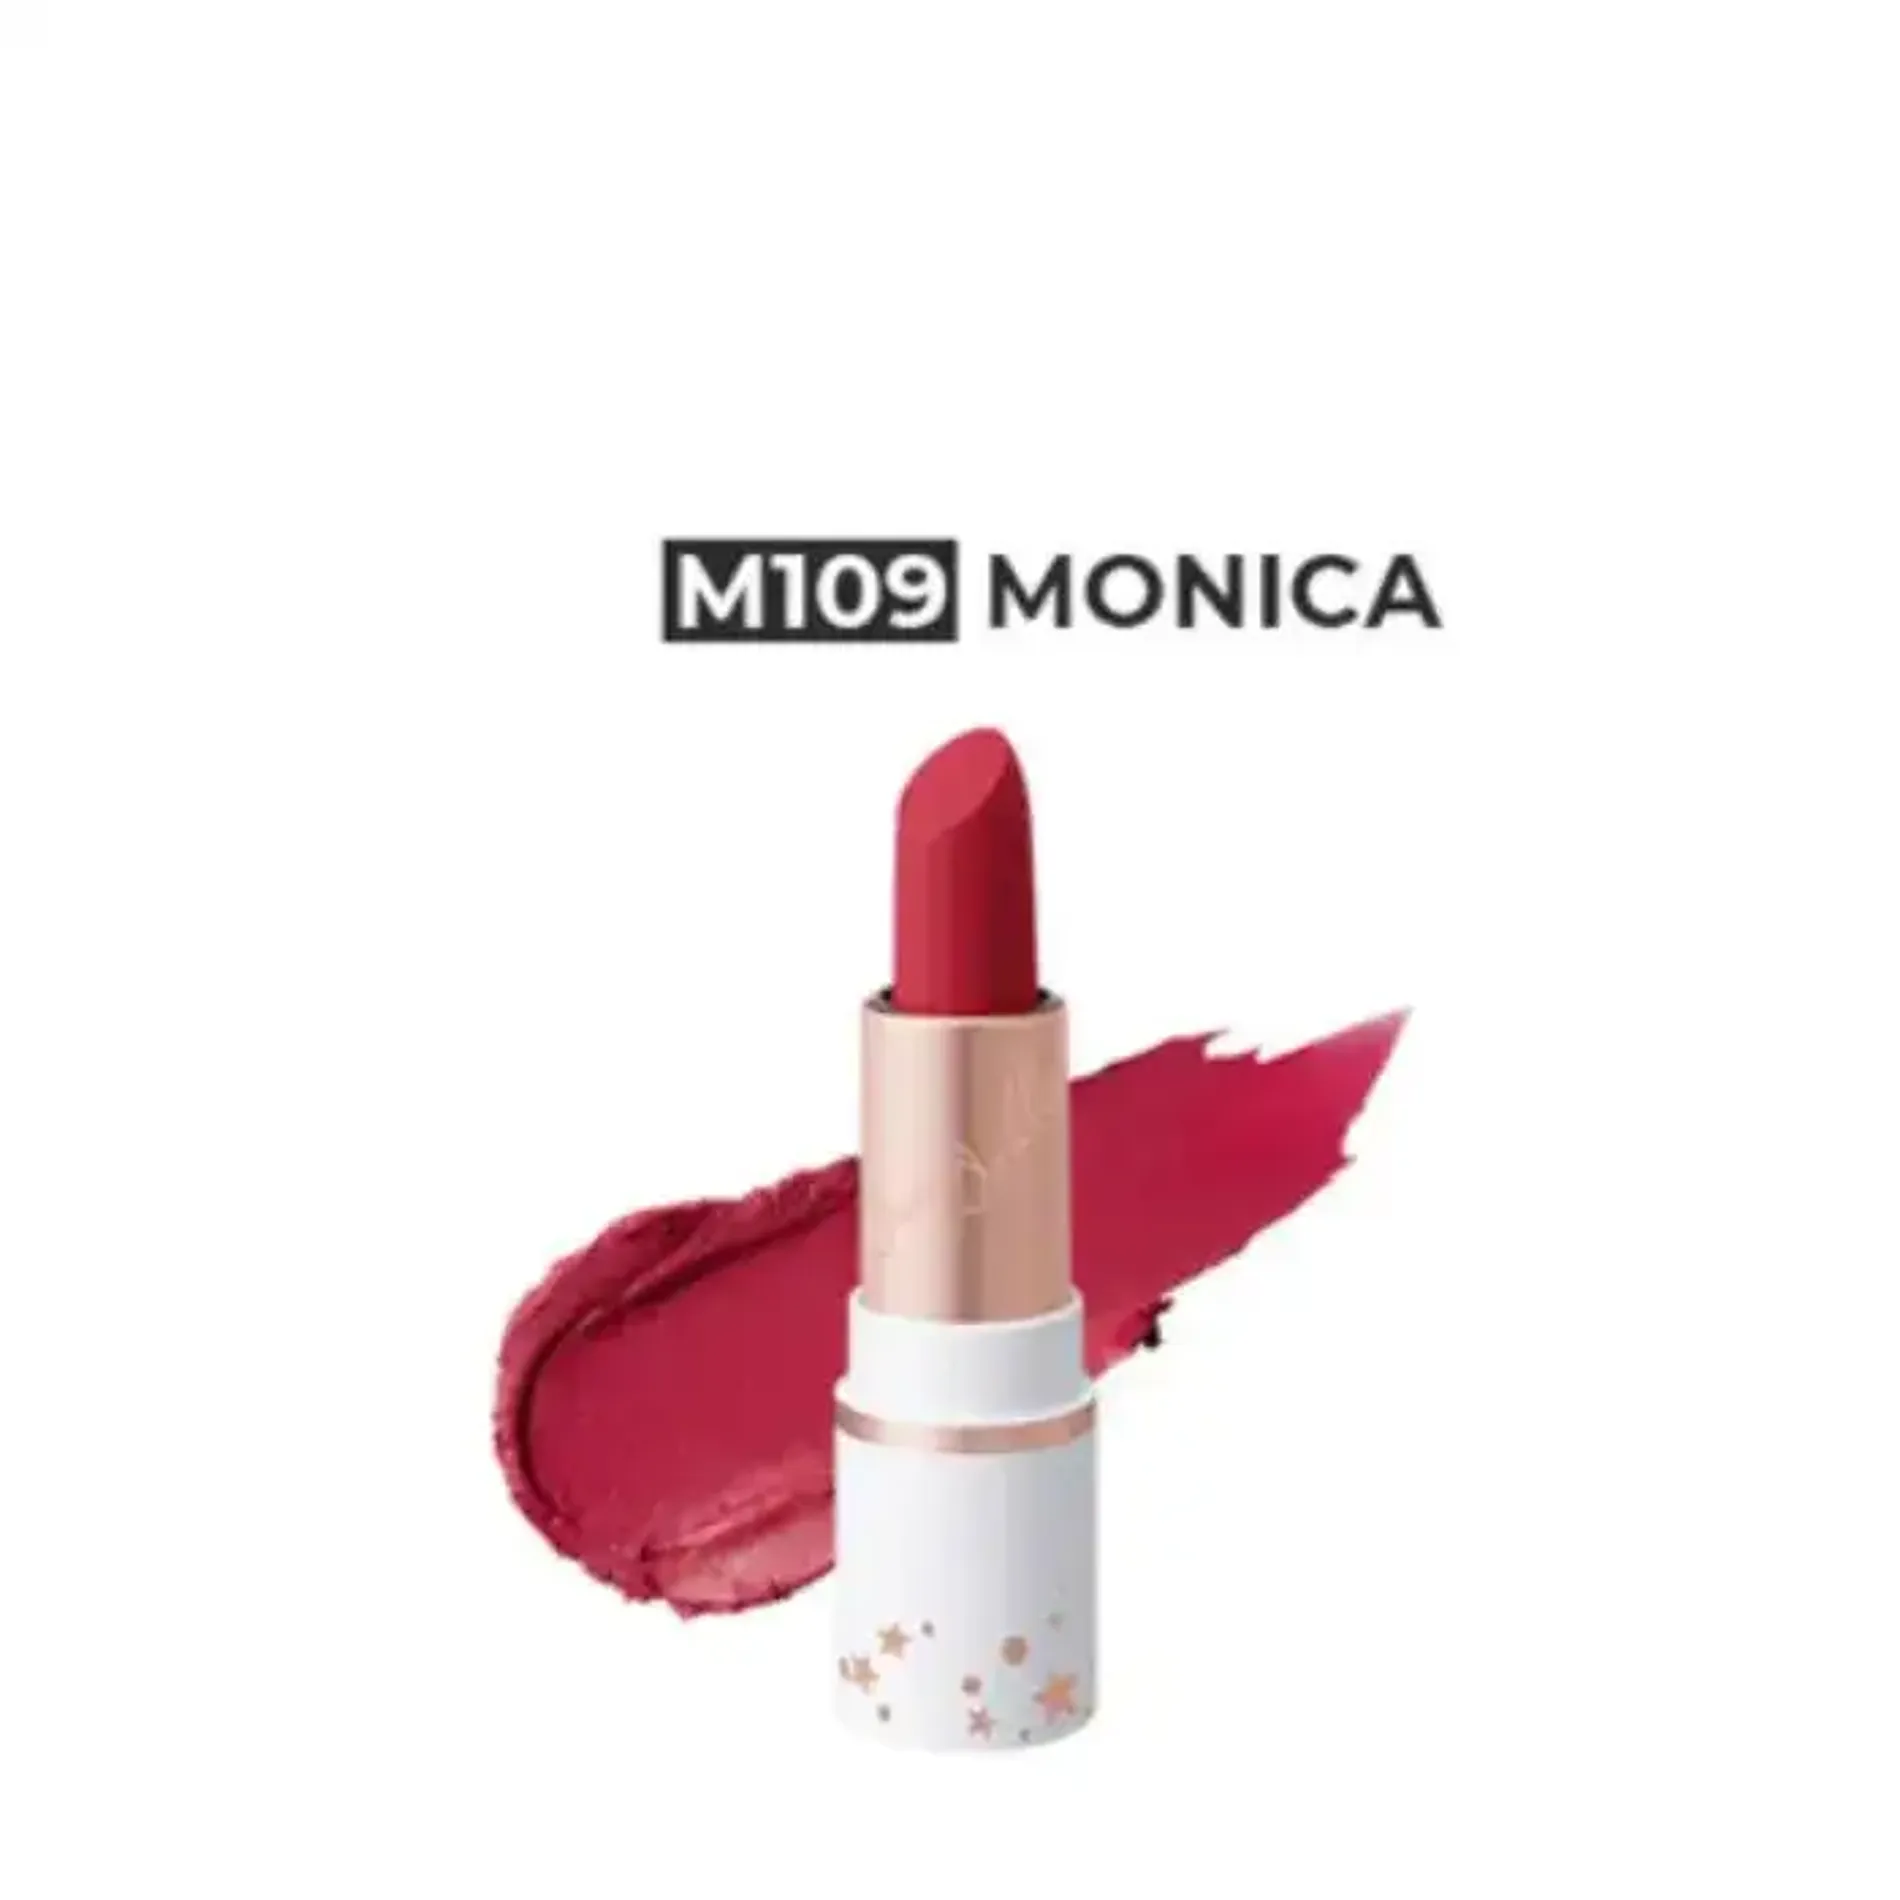 qua-tang-son-moi-lip-paradise-effortless-matte-lipstick-mini-m109-monica-1-2g-1